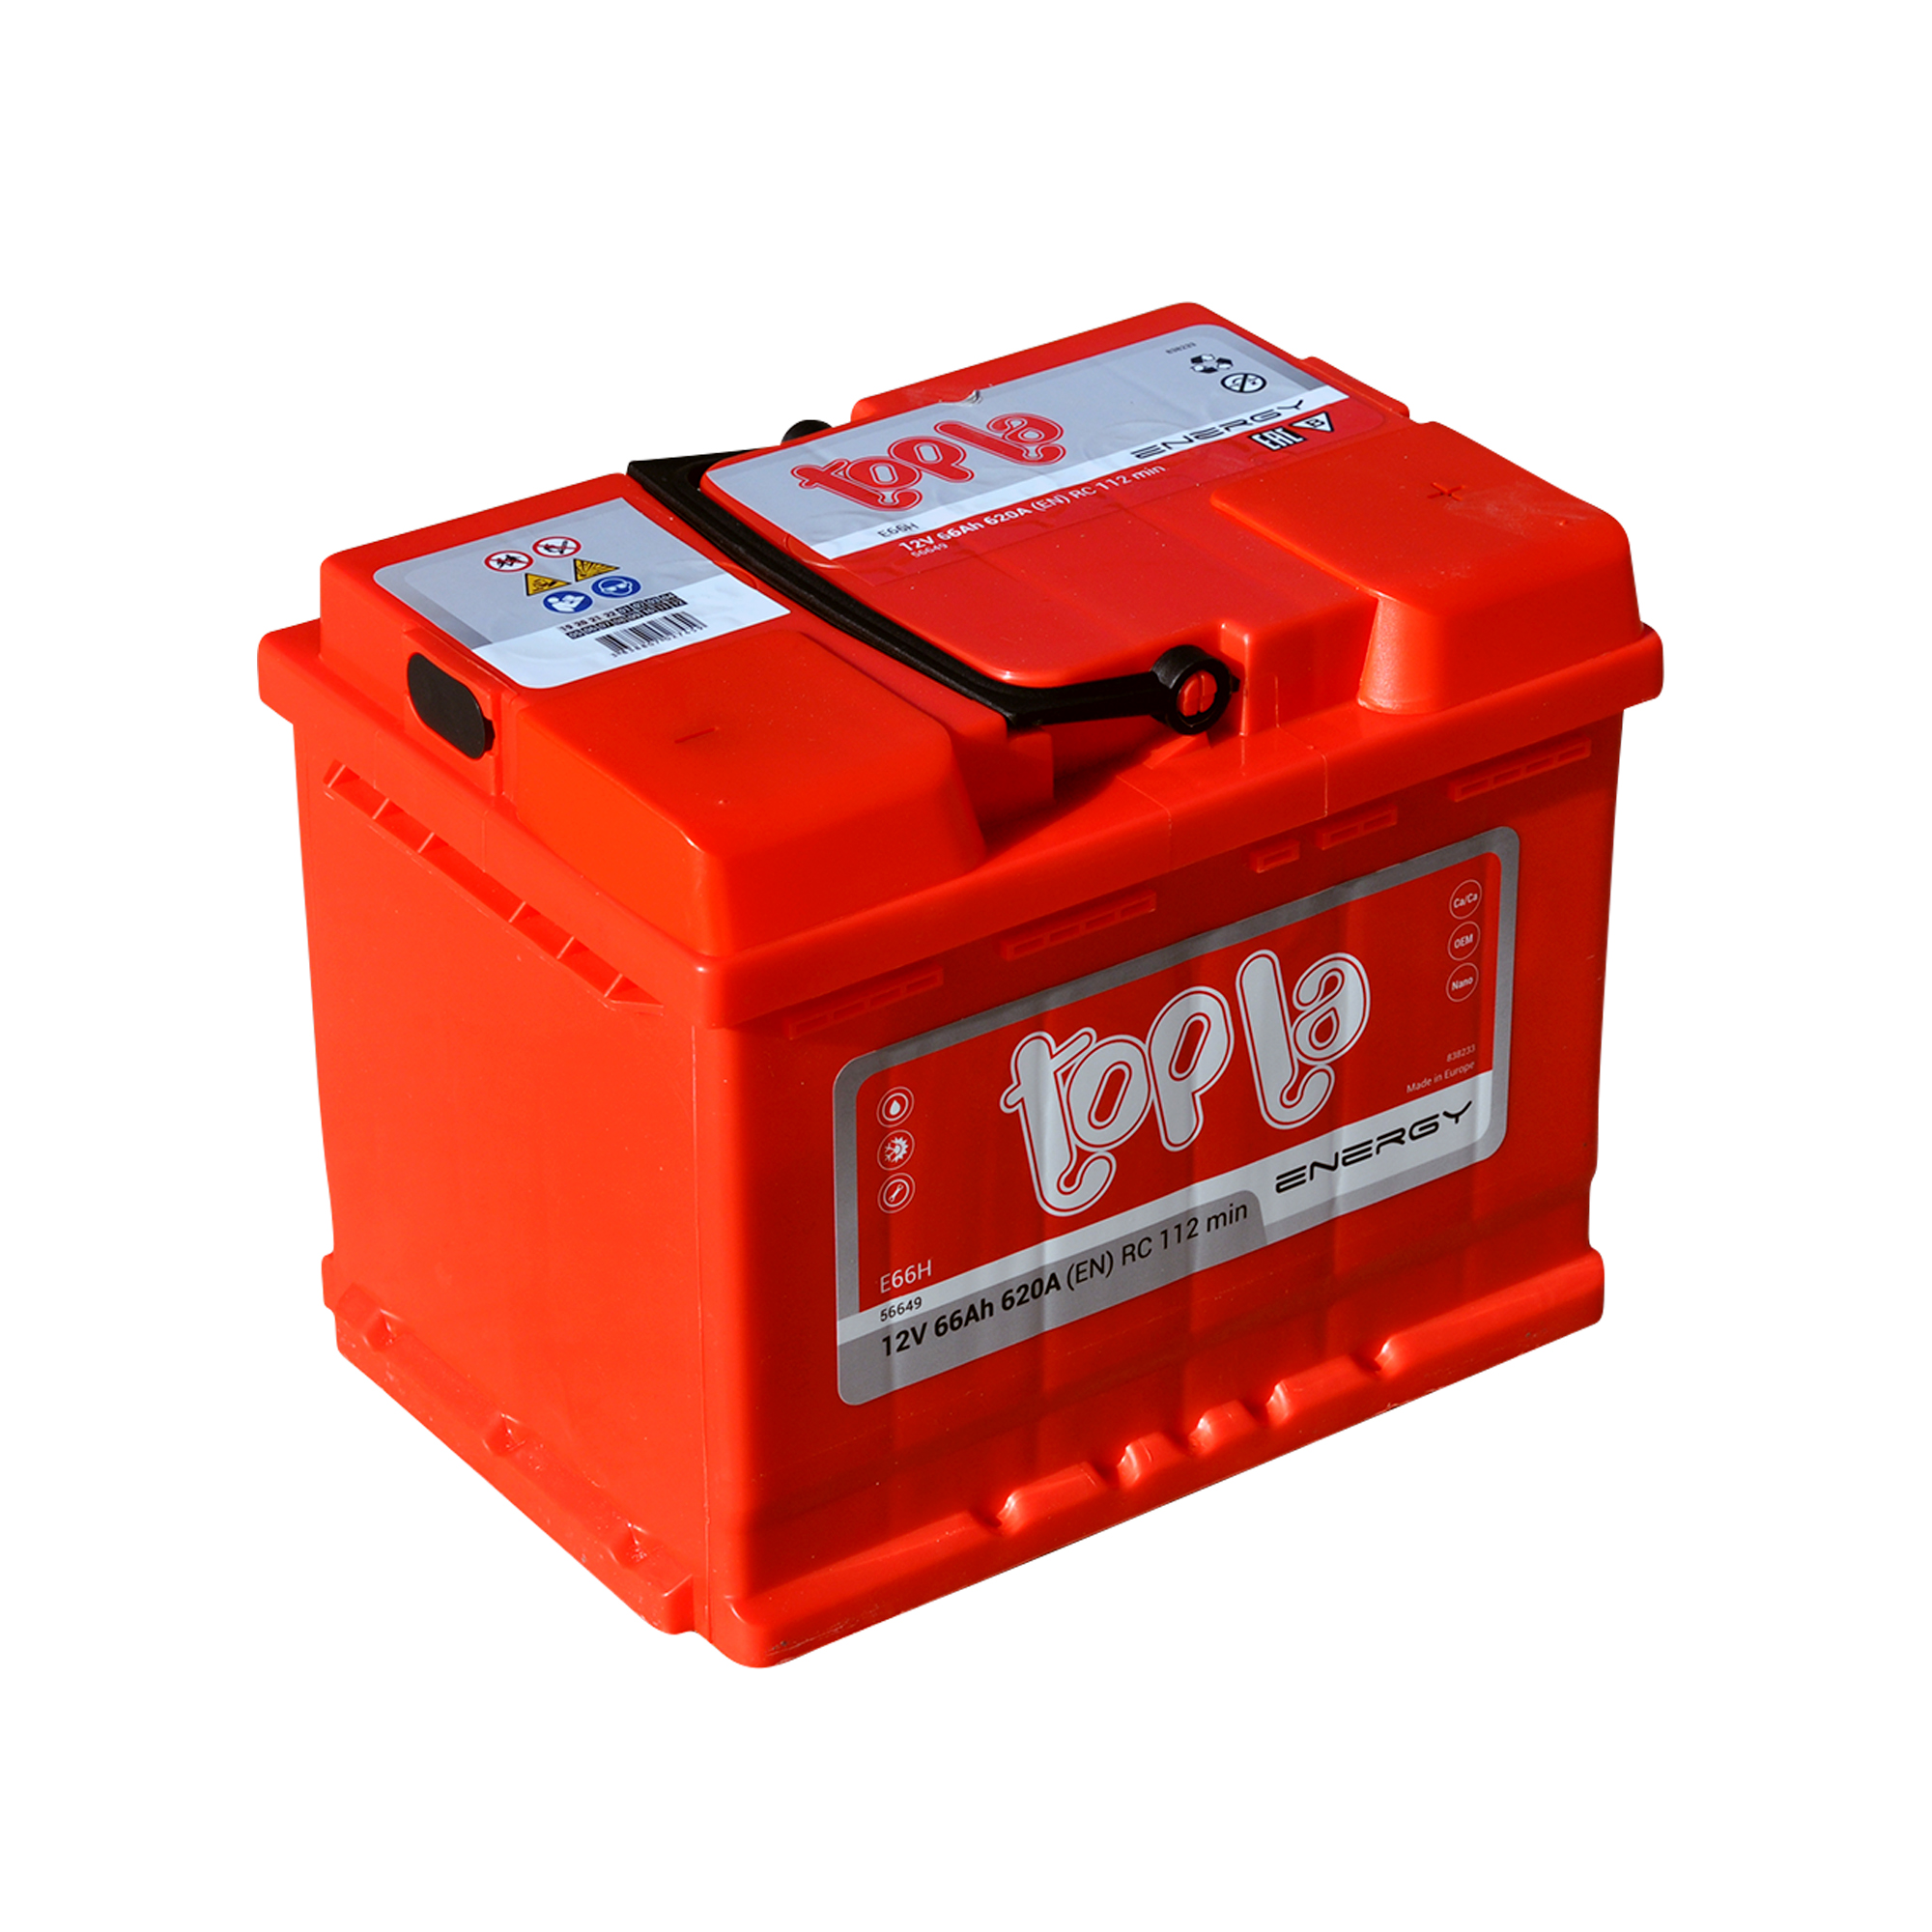 Deny discretion Fore type Baterie auto TOPLA ENERGY 66Ah 108066 EN 620A | Acu Shop